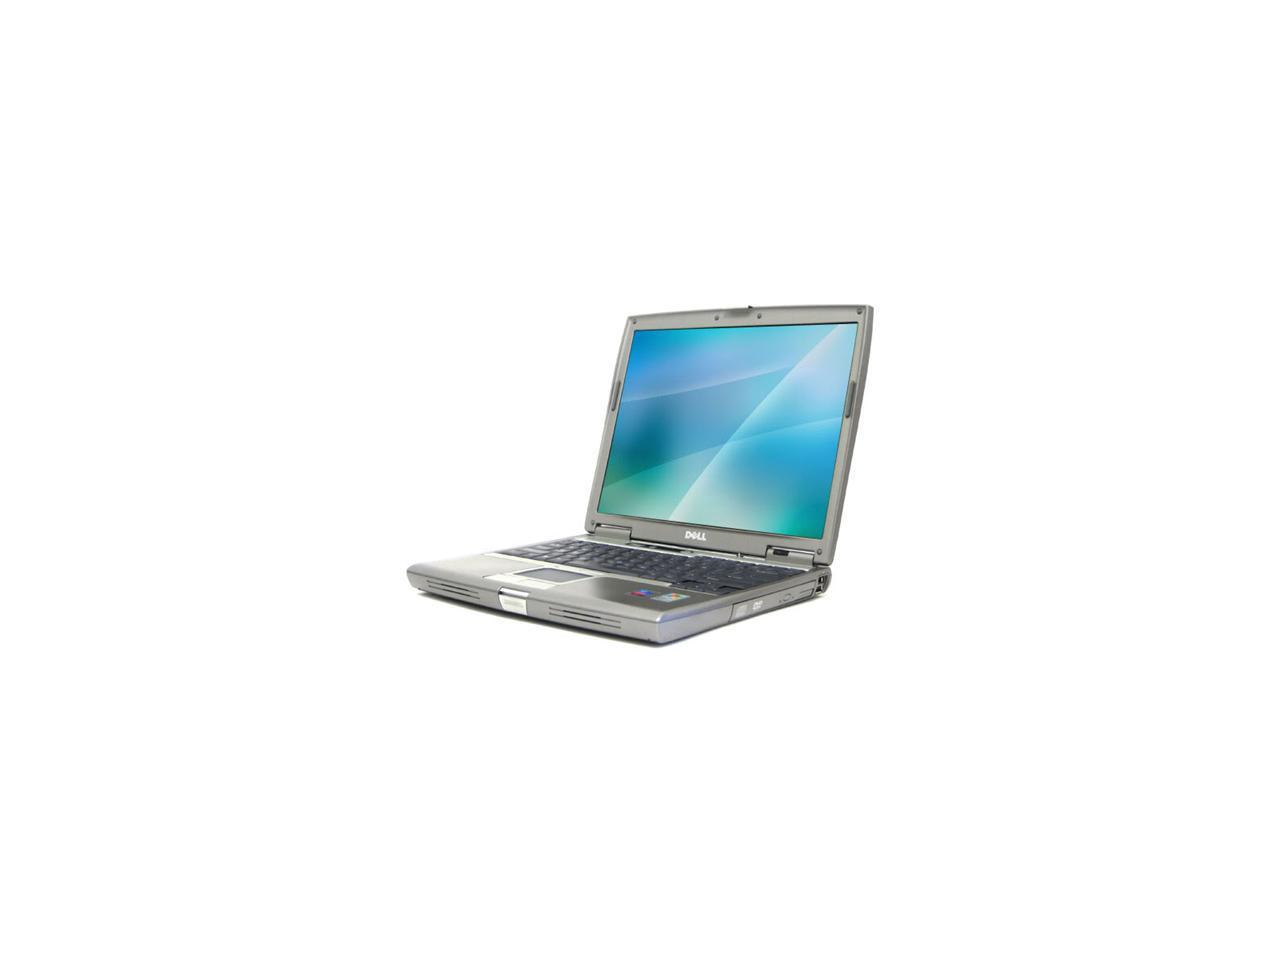 Refurbished: Dell Latitude D610 Laptop - 1.7GHz Pentium Mobile